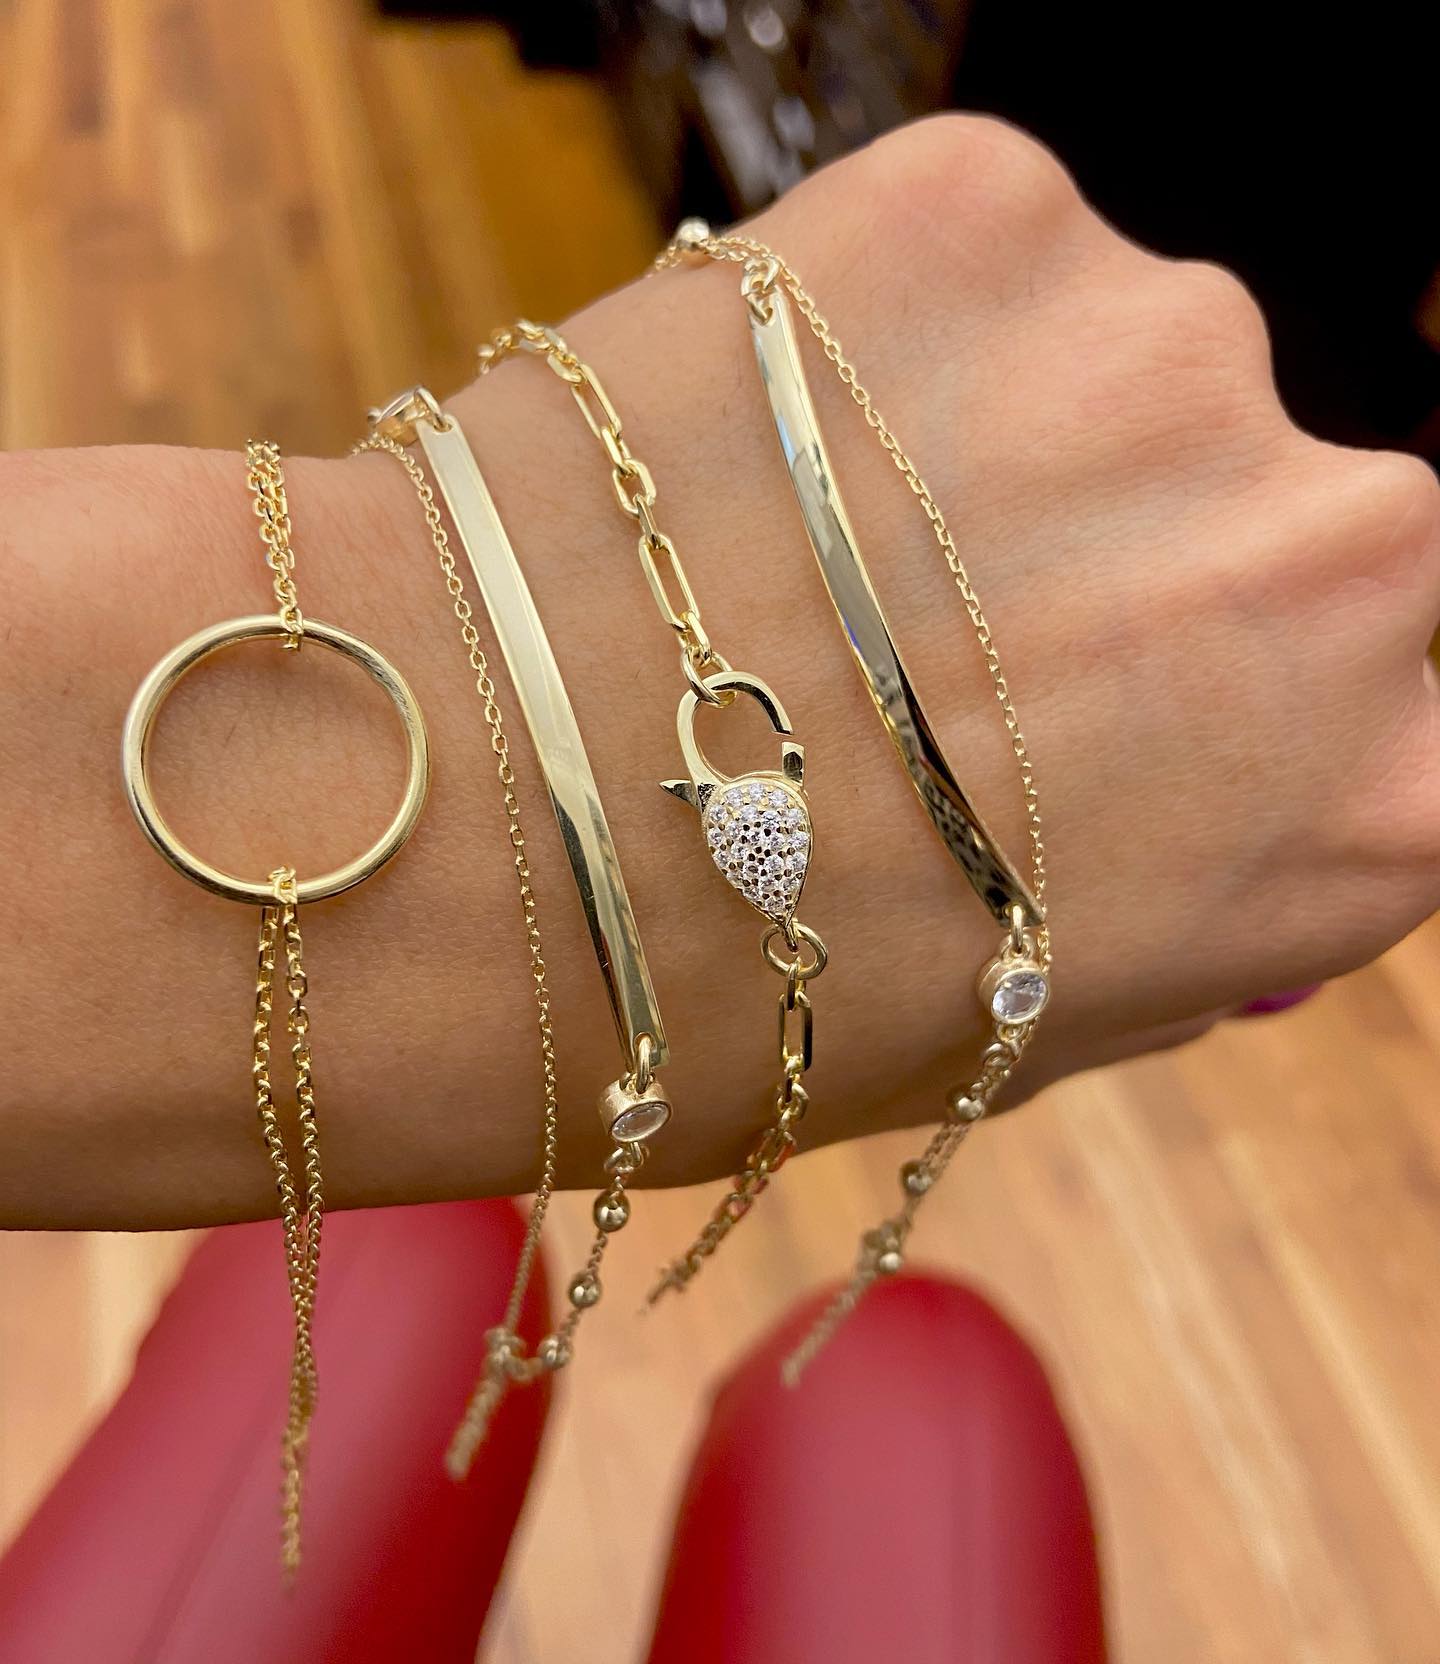 A wrist adorned with multiple gold bar bracelets